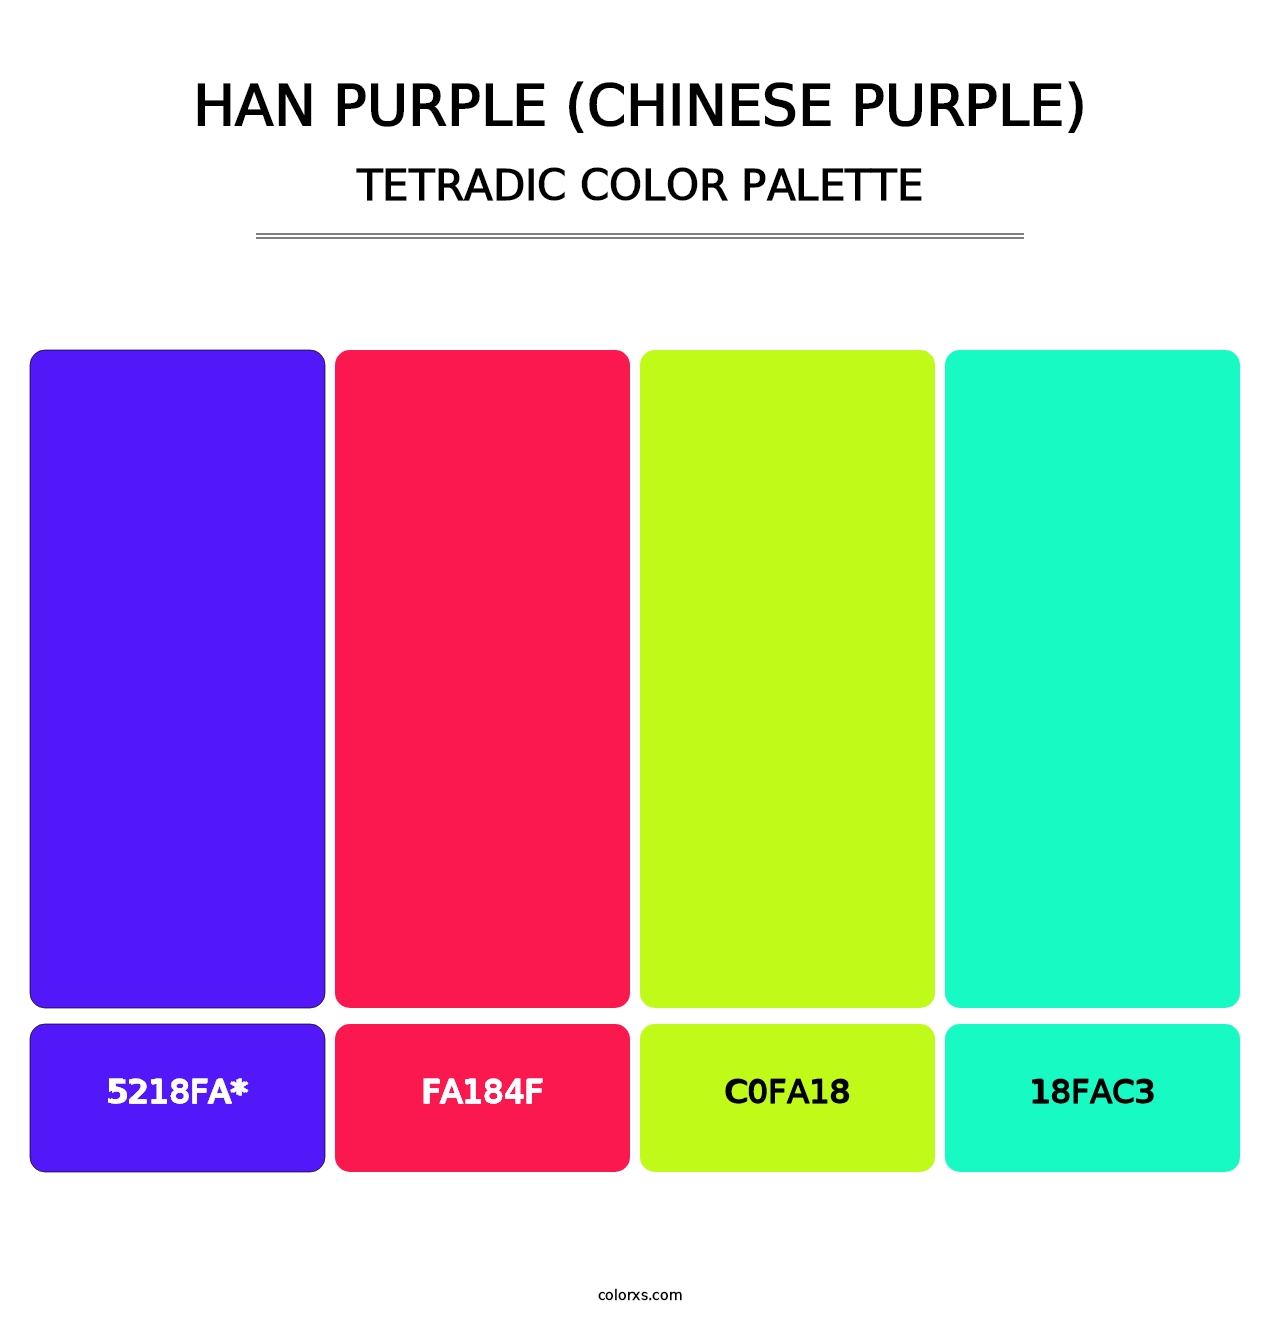 Han Purple (Chinese Purple) - Tetradic Color Palette